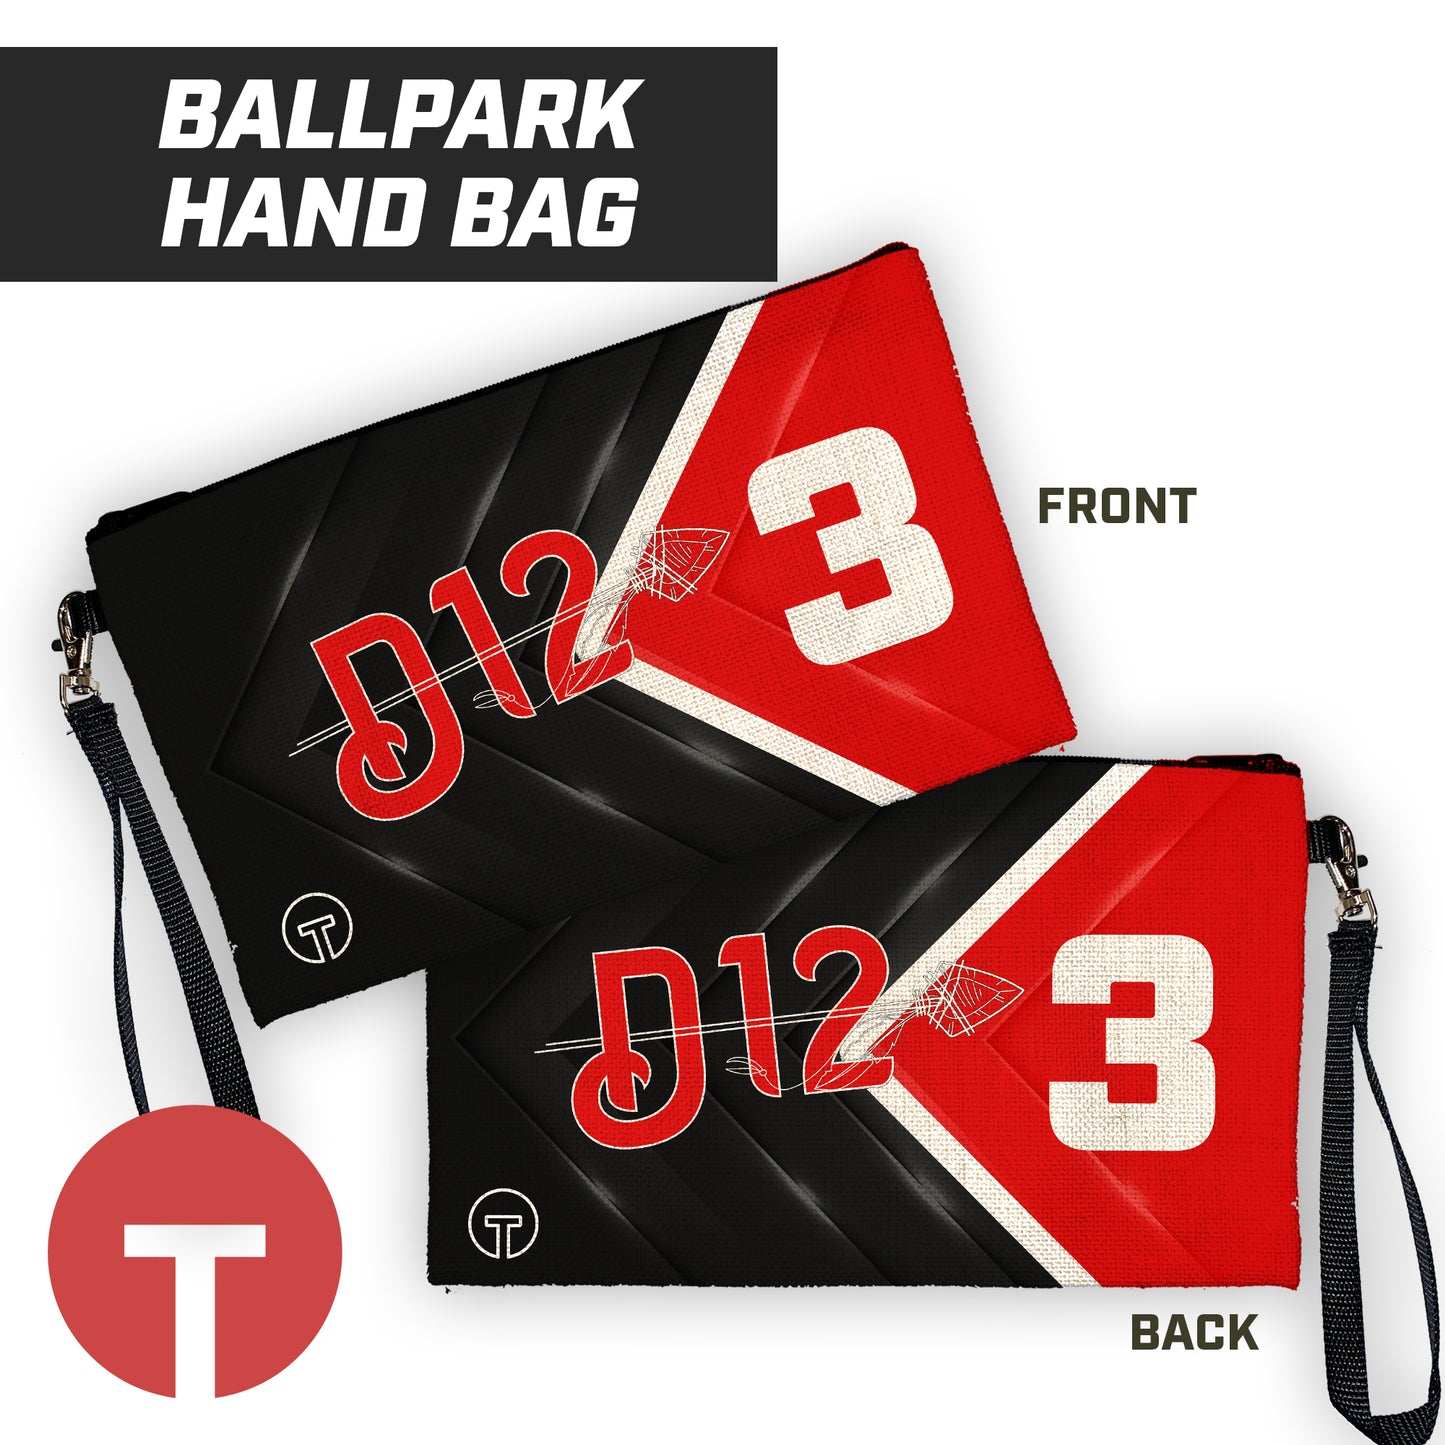 D12 - 9"x5" Zipper Bag with Wrist Strap